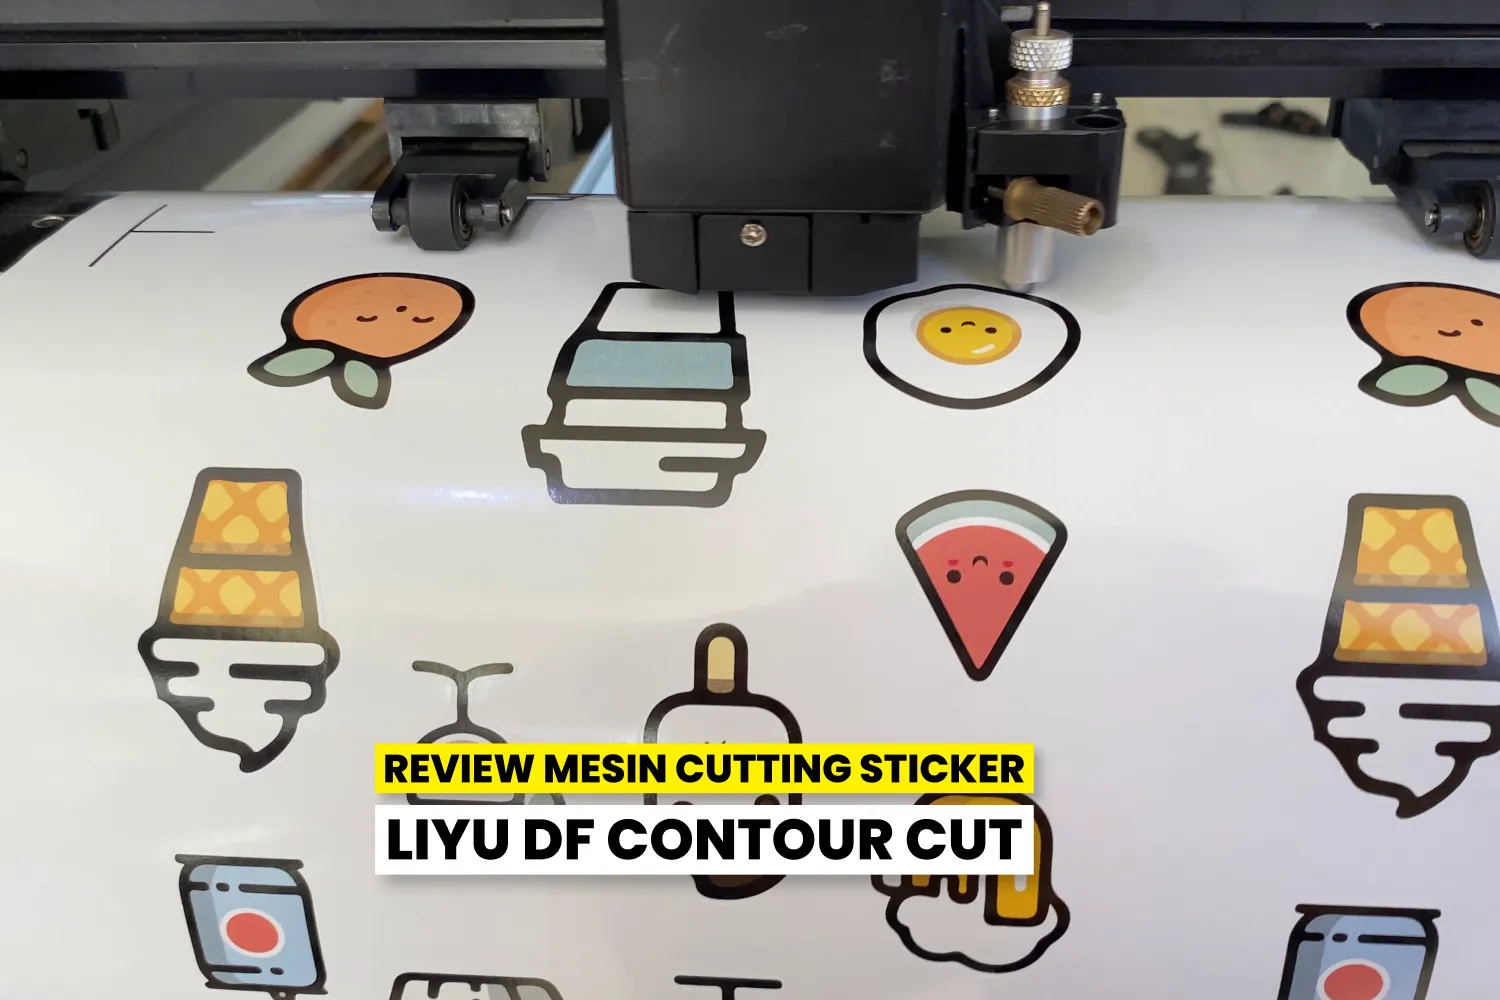 Mesin Cutting Sticker Liyu Df Contour Cut Sedang Memotong Stiker Dengan Presisi Tinggi.